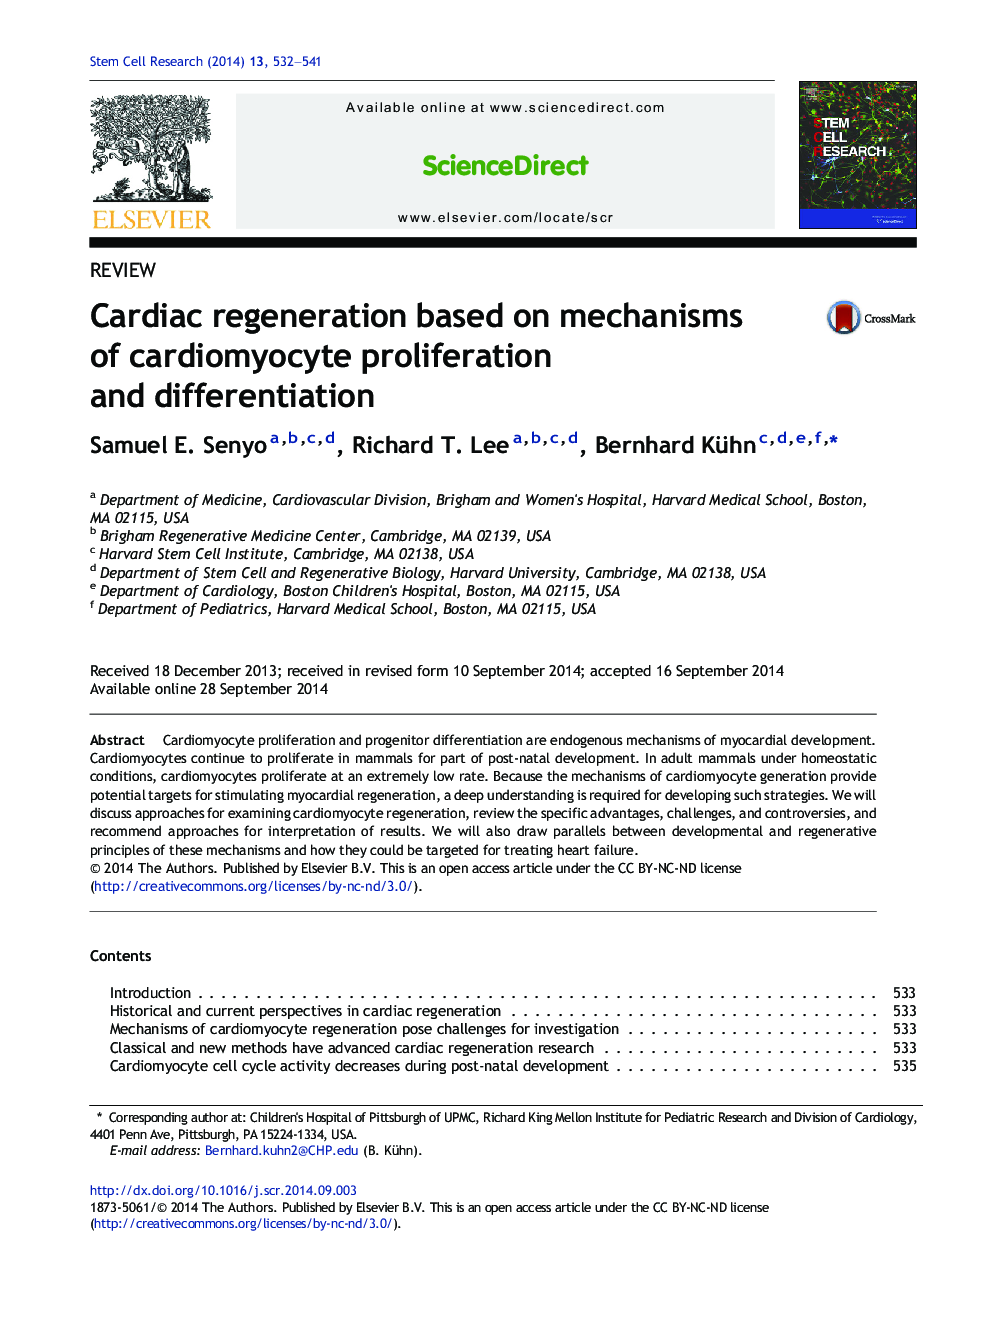 Cardiac regeneration based on mechanisms of cardiomyocyte proliferation and differentiation